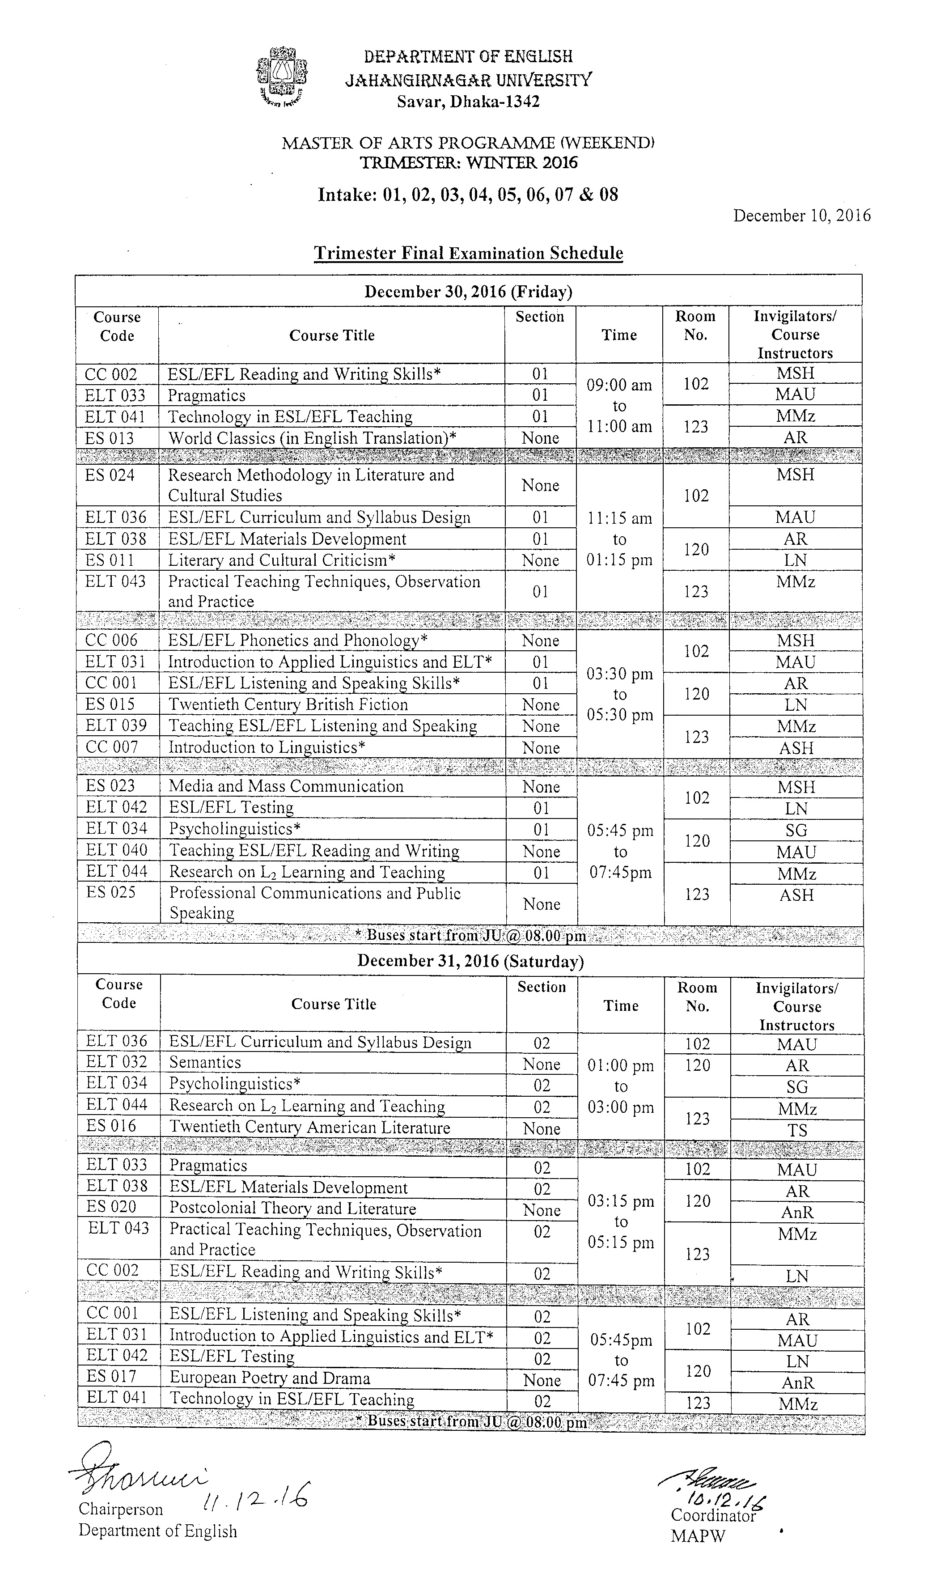 final-examination-schedule-trimester-winter-2016 – Department of English Jahangirnagar University